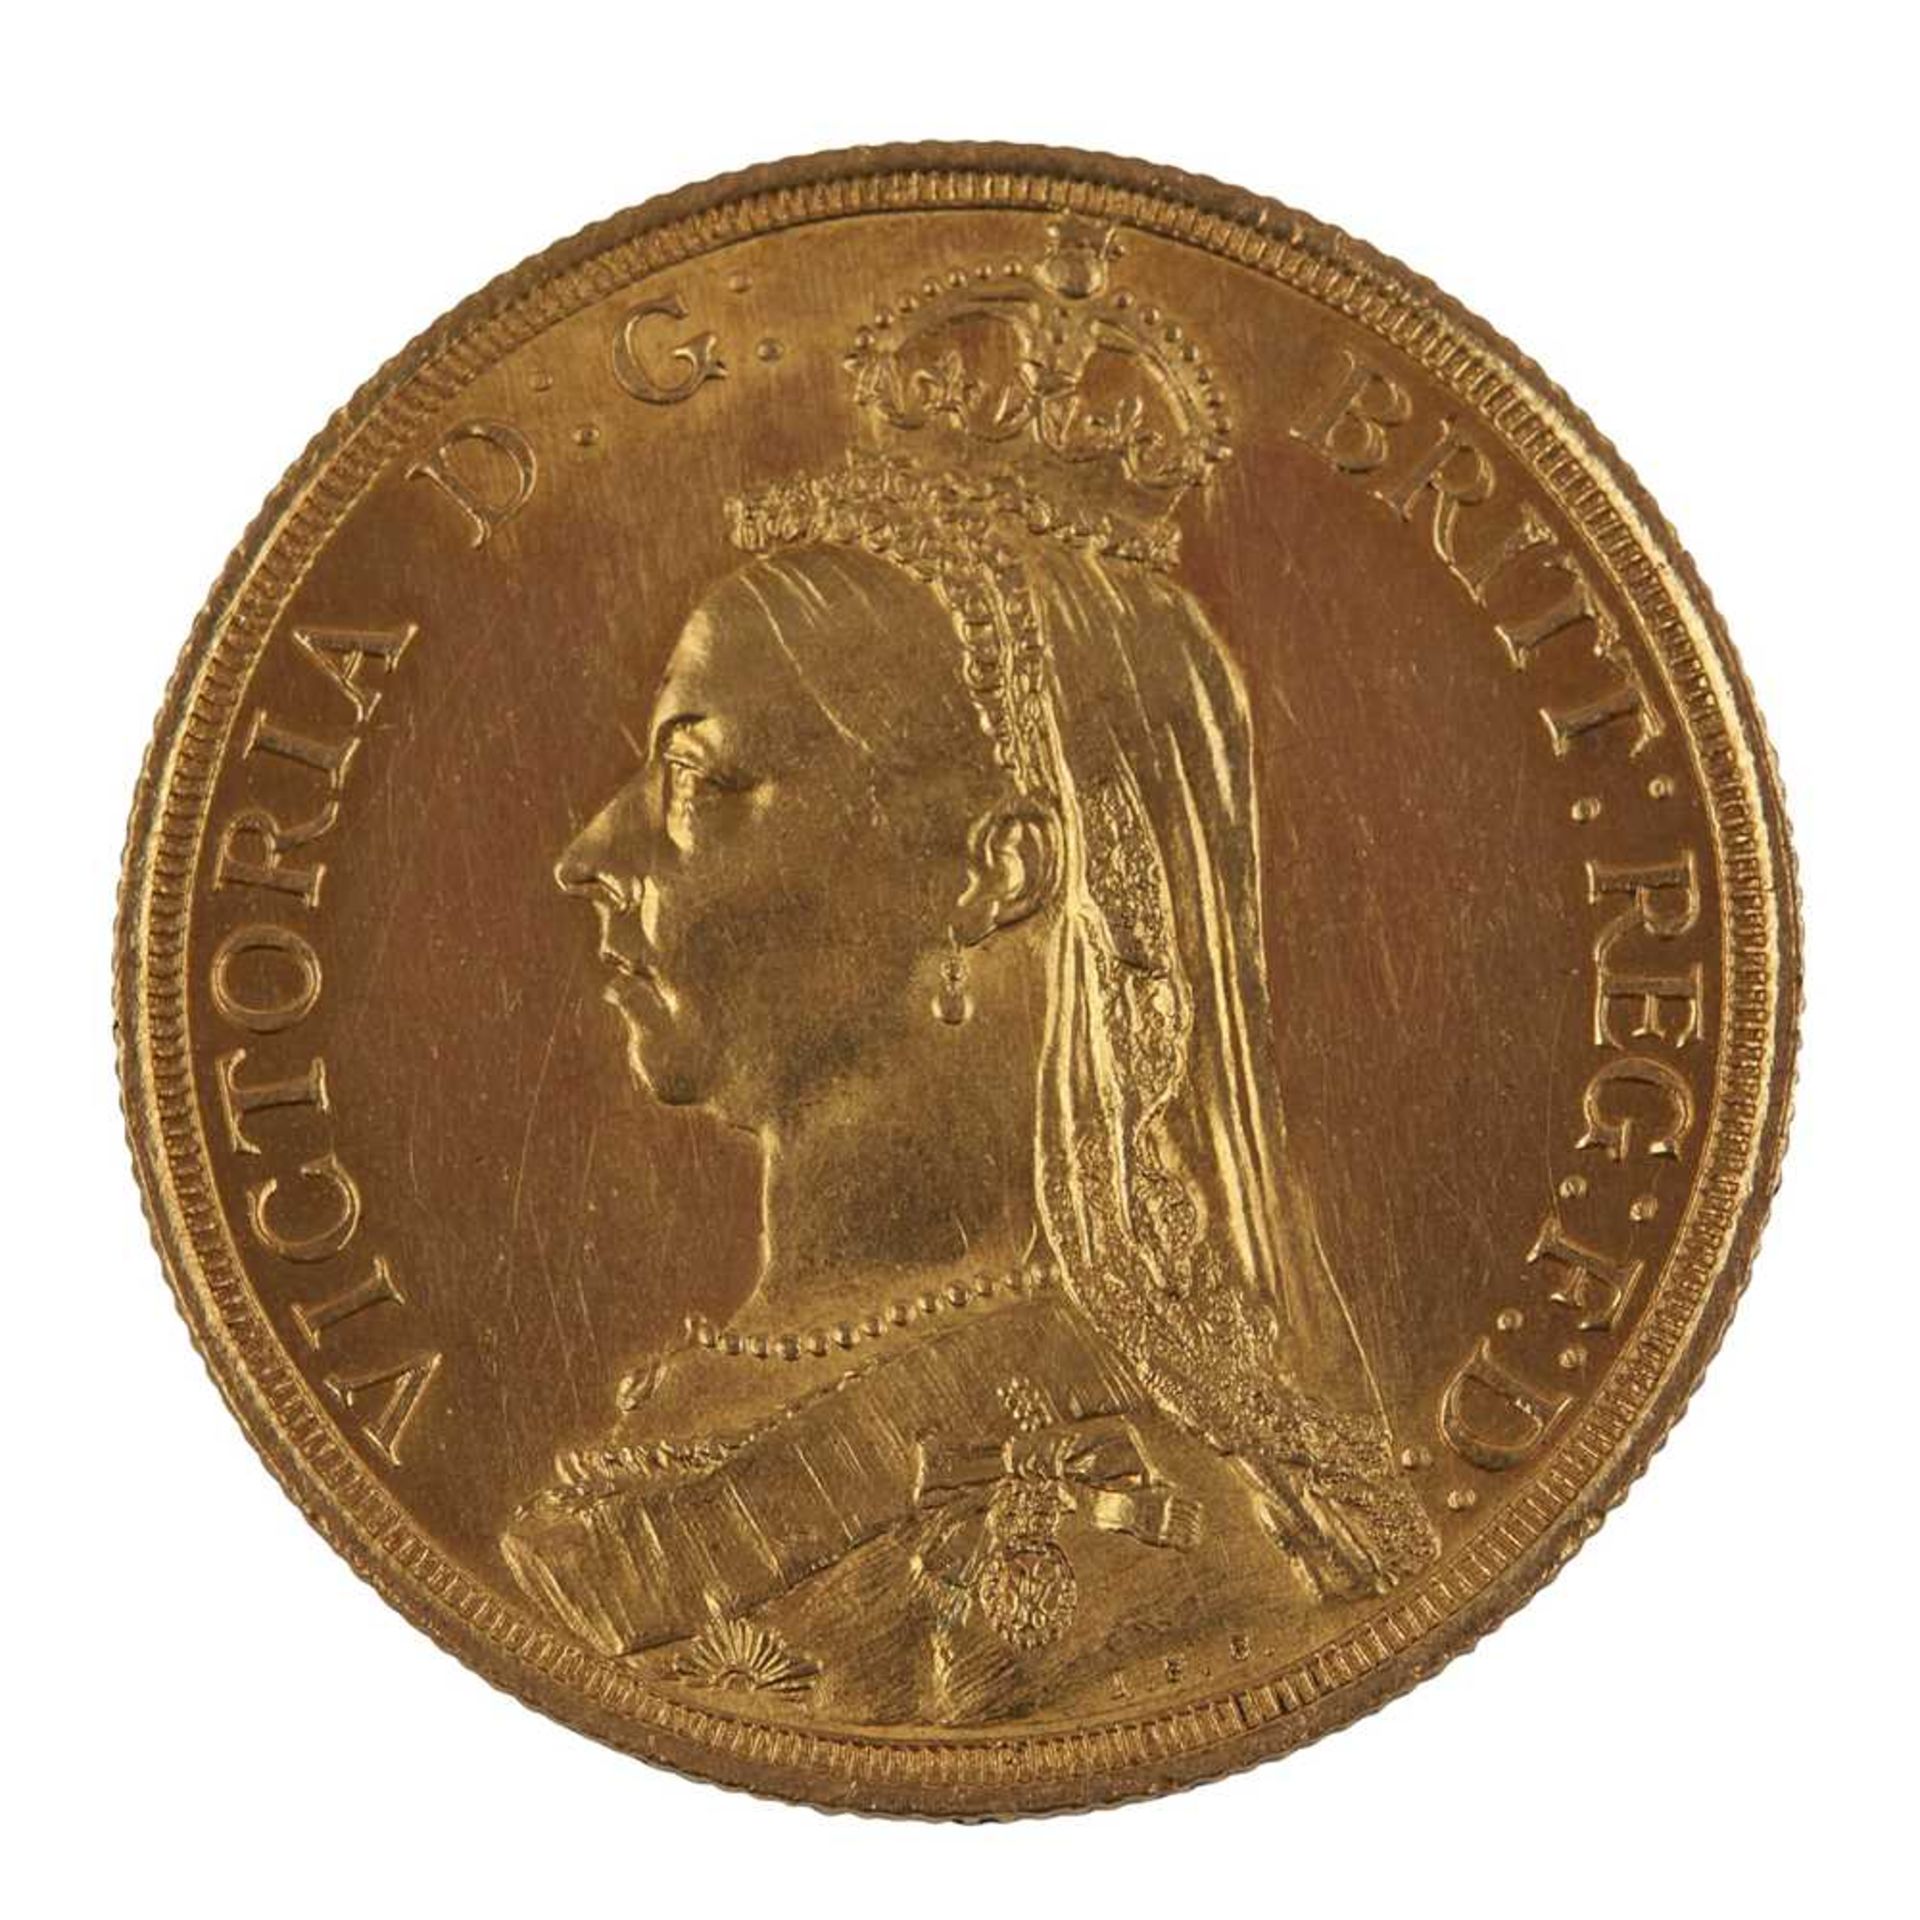 A Victorian £2 coin